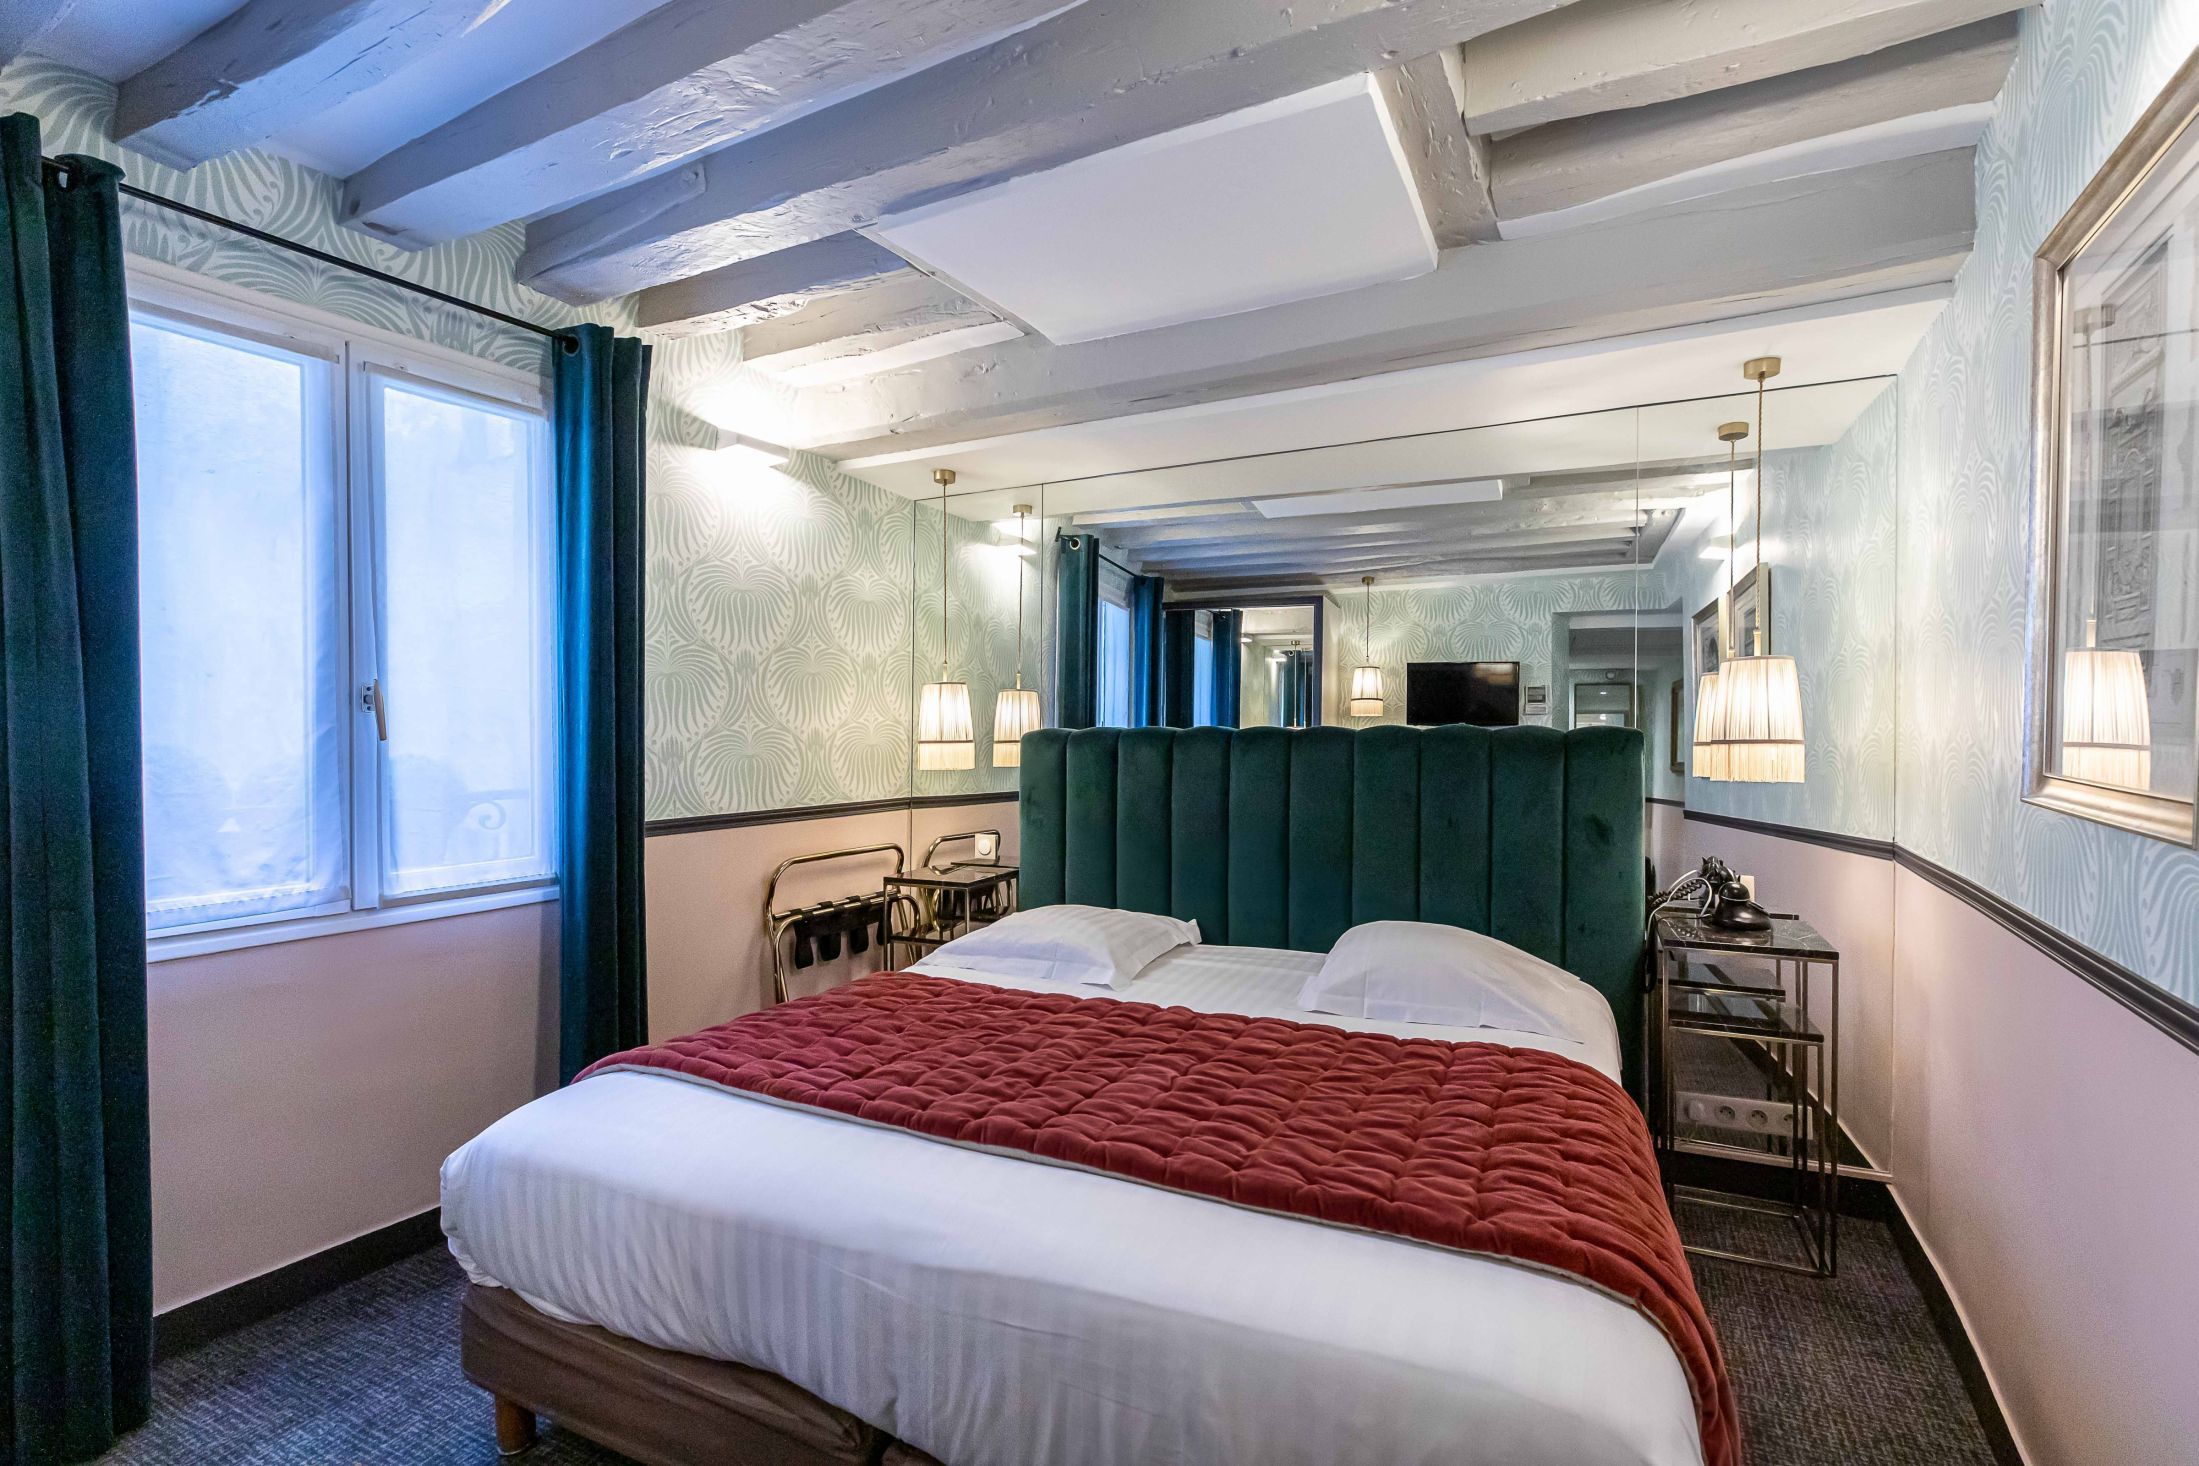 Hotel Dauphine Saint-Germain - Superior Double Room